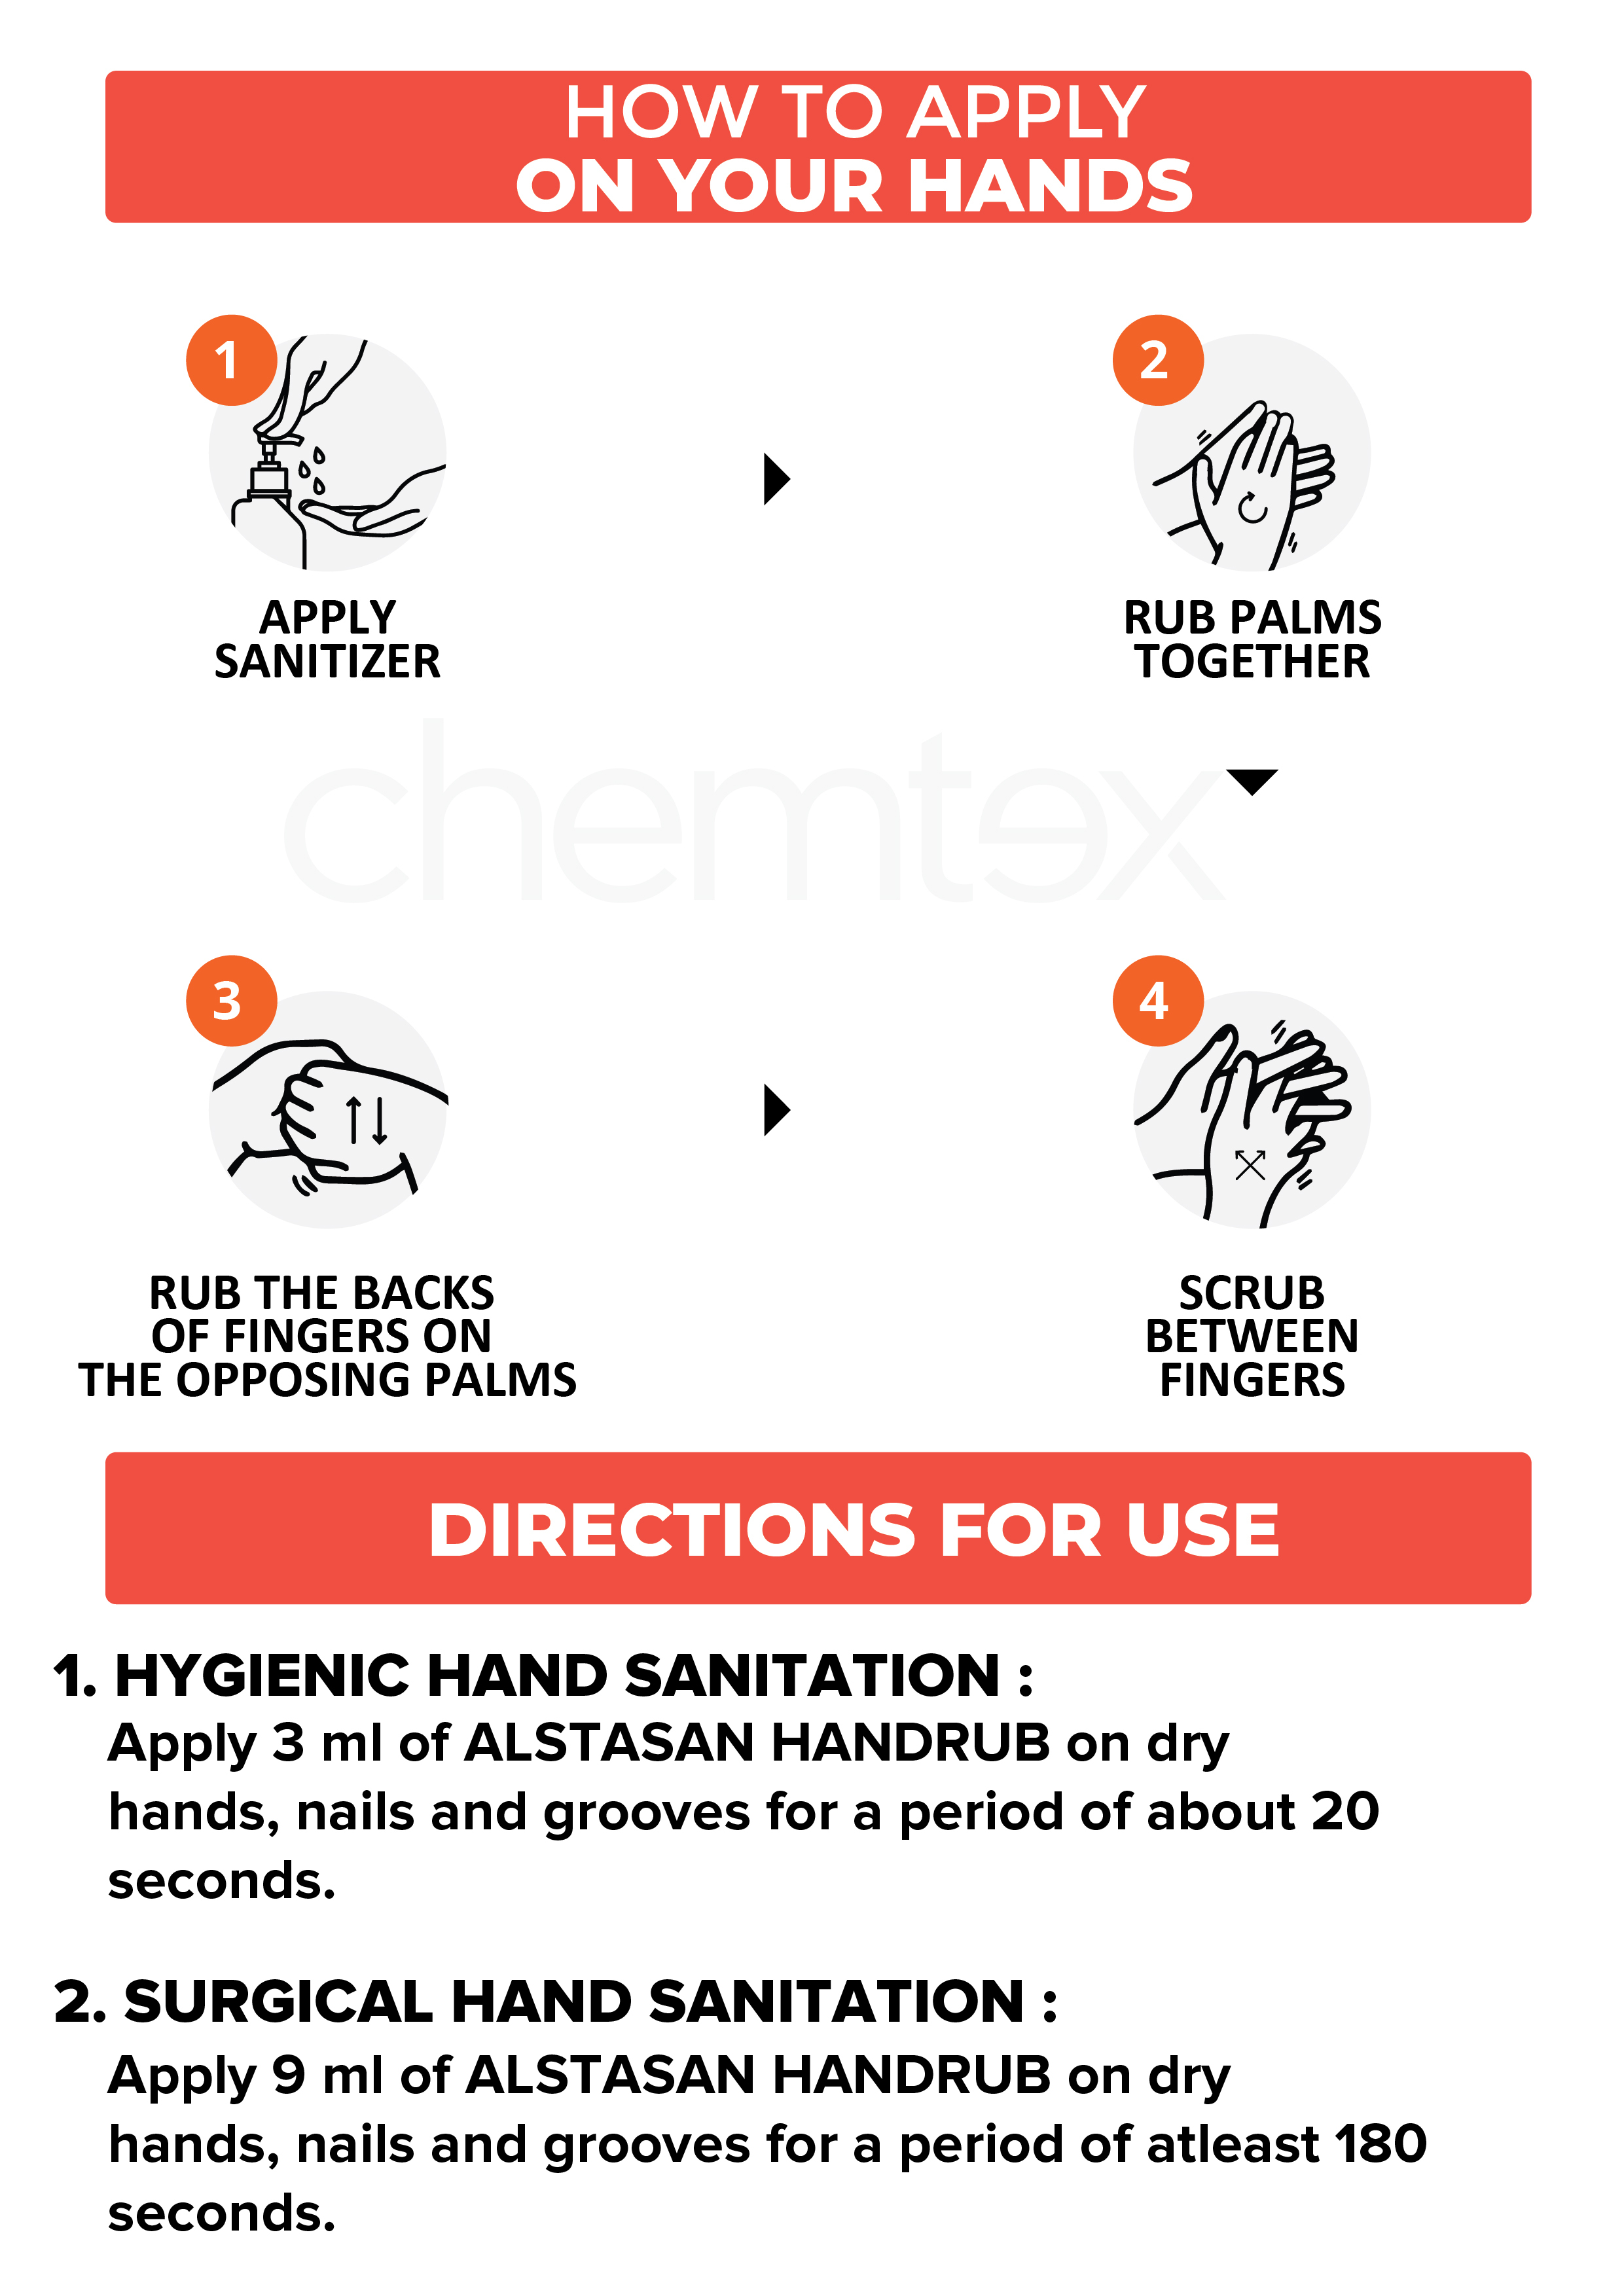 ALSTASAN HAND RUB: Alcohol based Hand Sanitizer